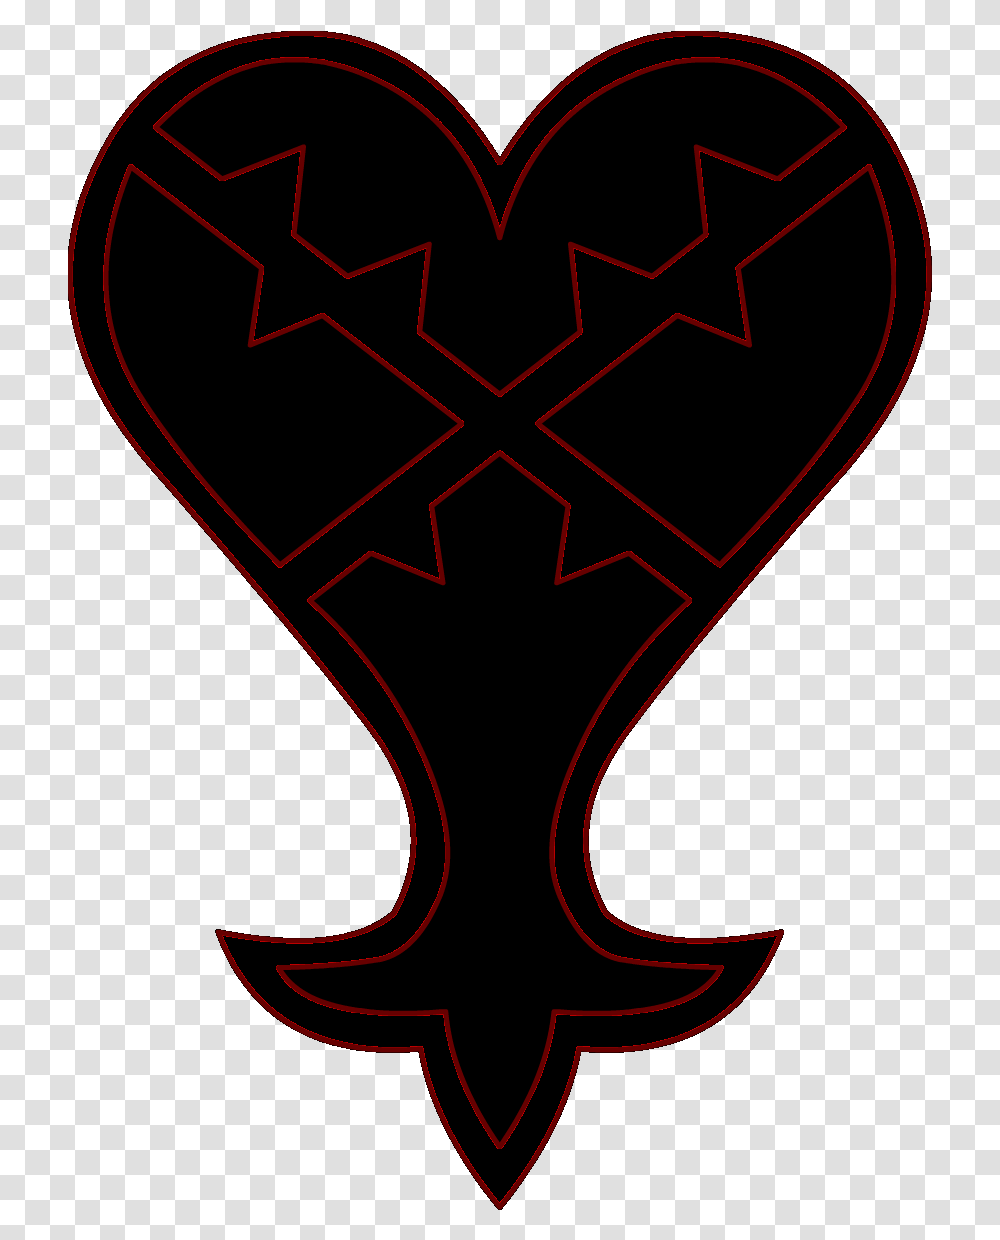 Blackheart Emblem Illustration, Hand, Grenade, Bomb Transparent Png